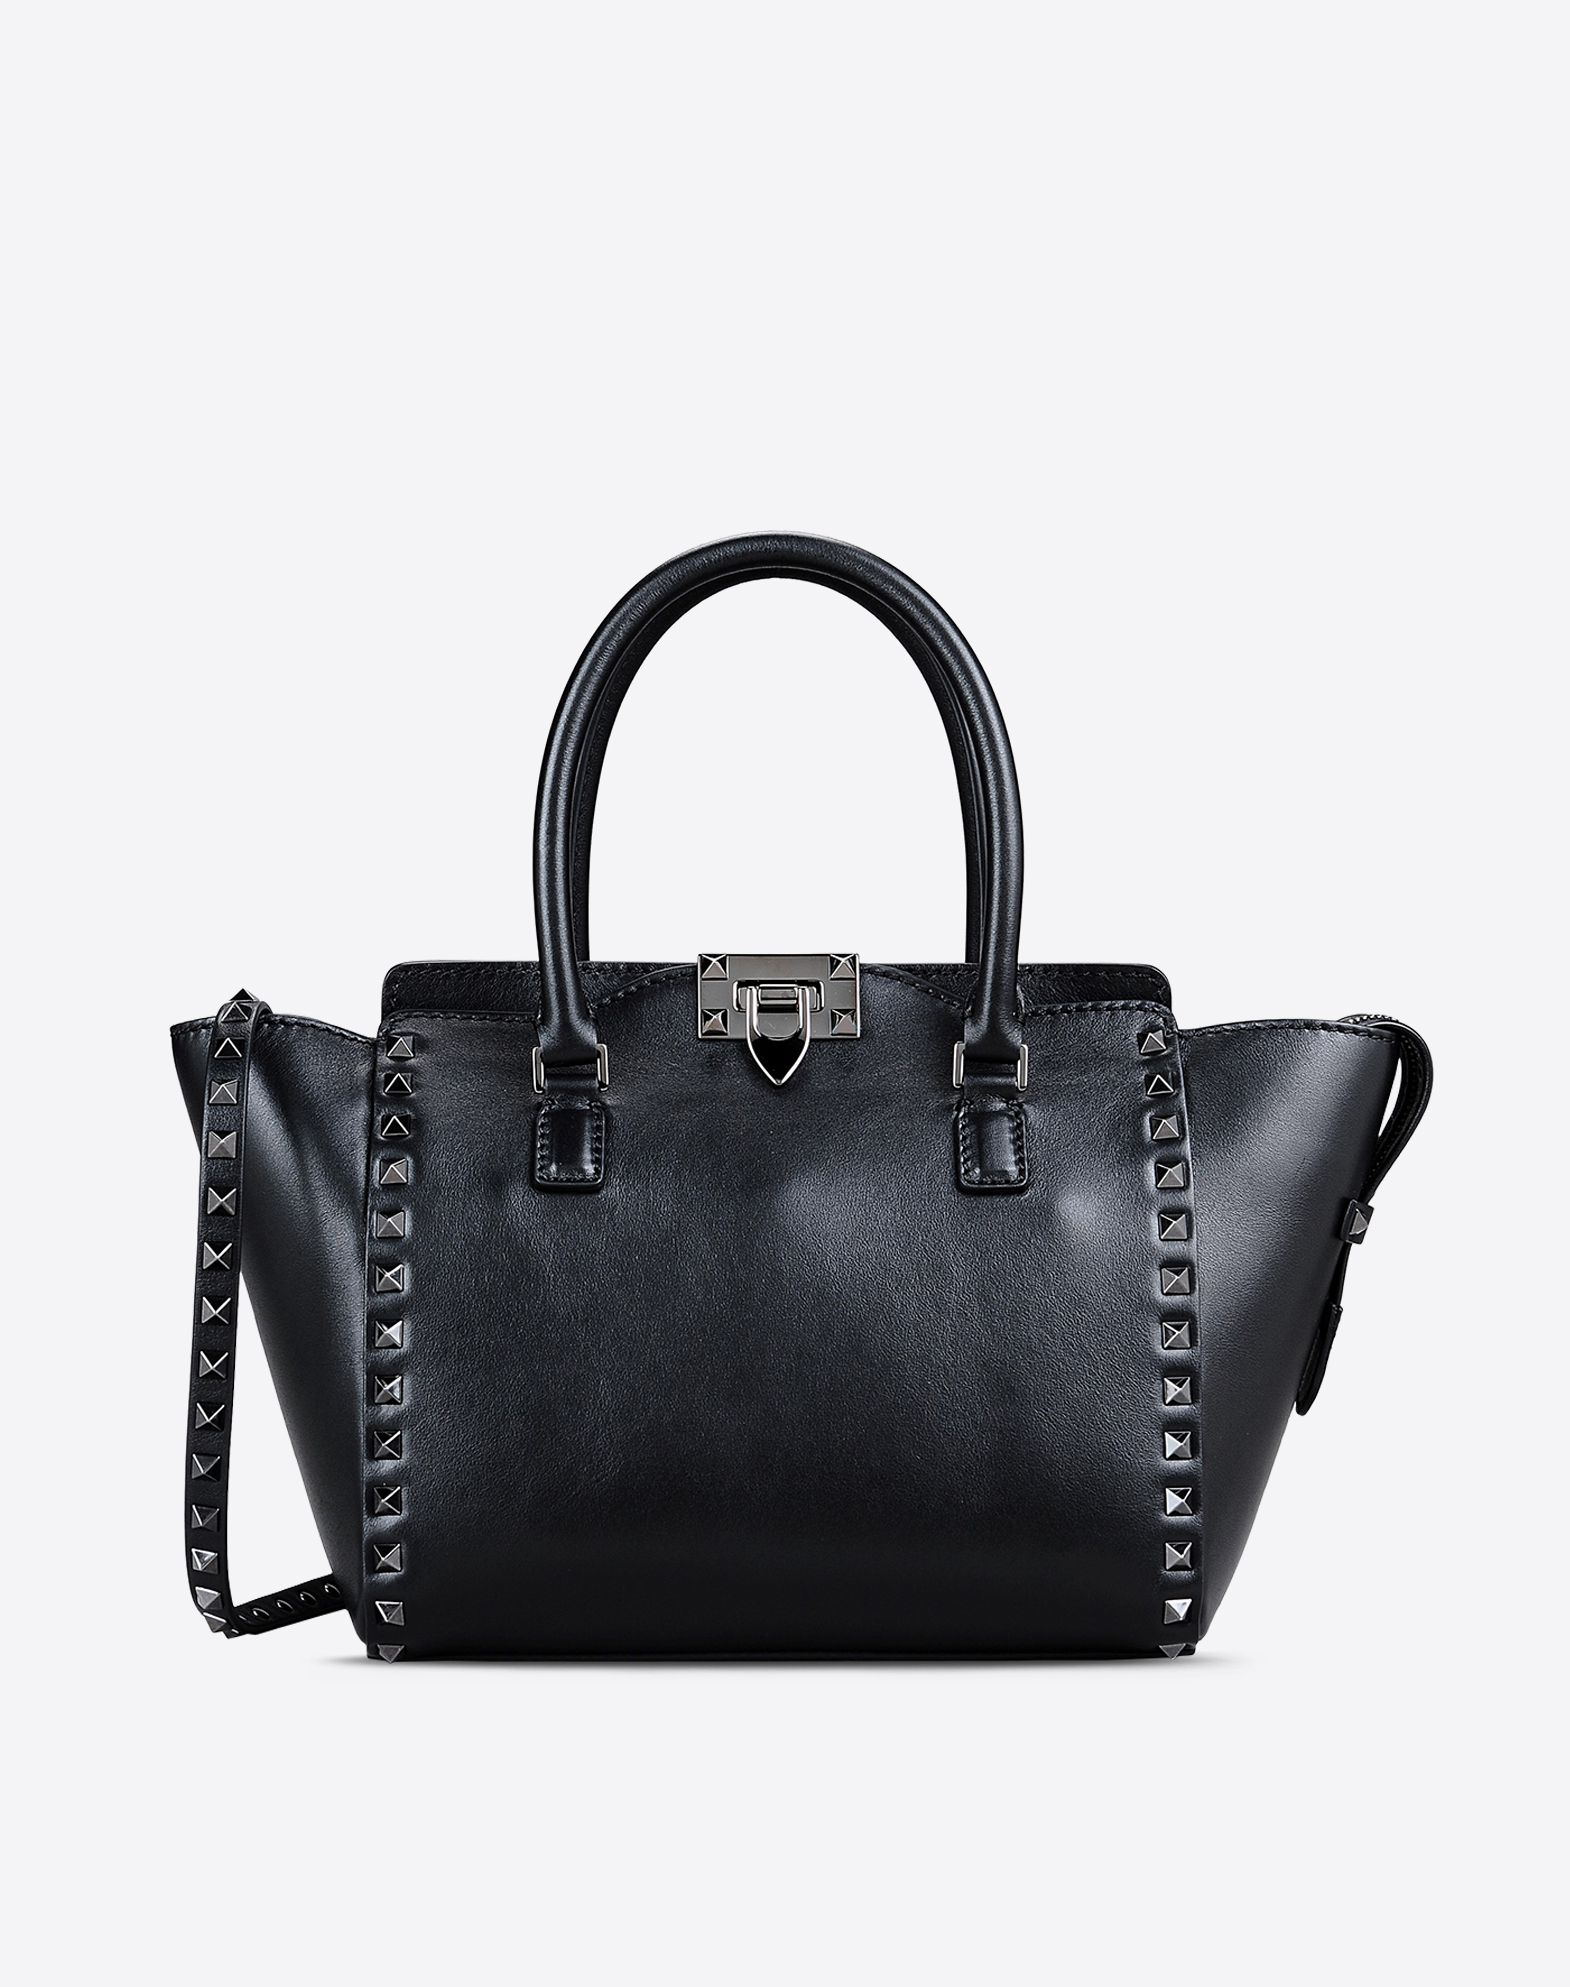 Valentino Garavani Rockstud Small Double Handle Bag, Double Handle Bags for Women - Valentino